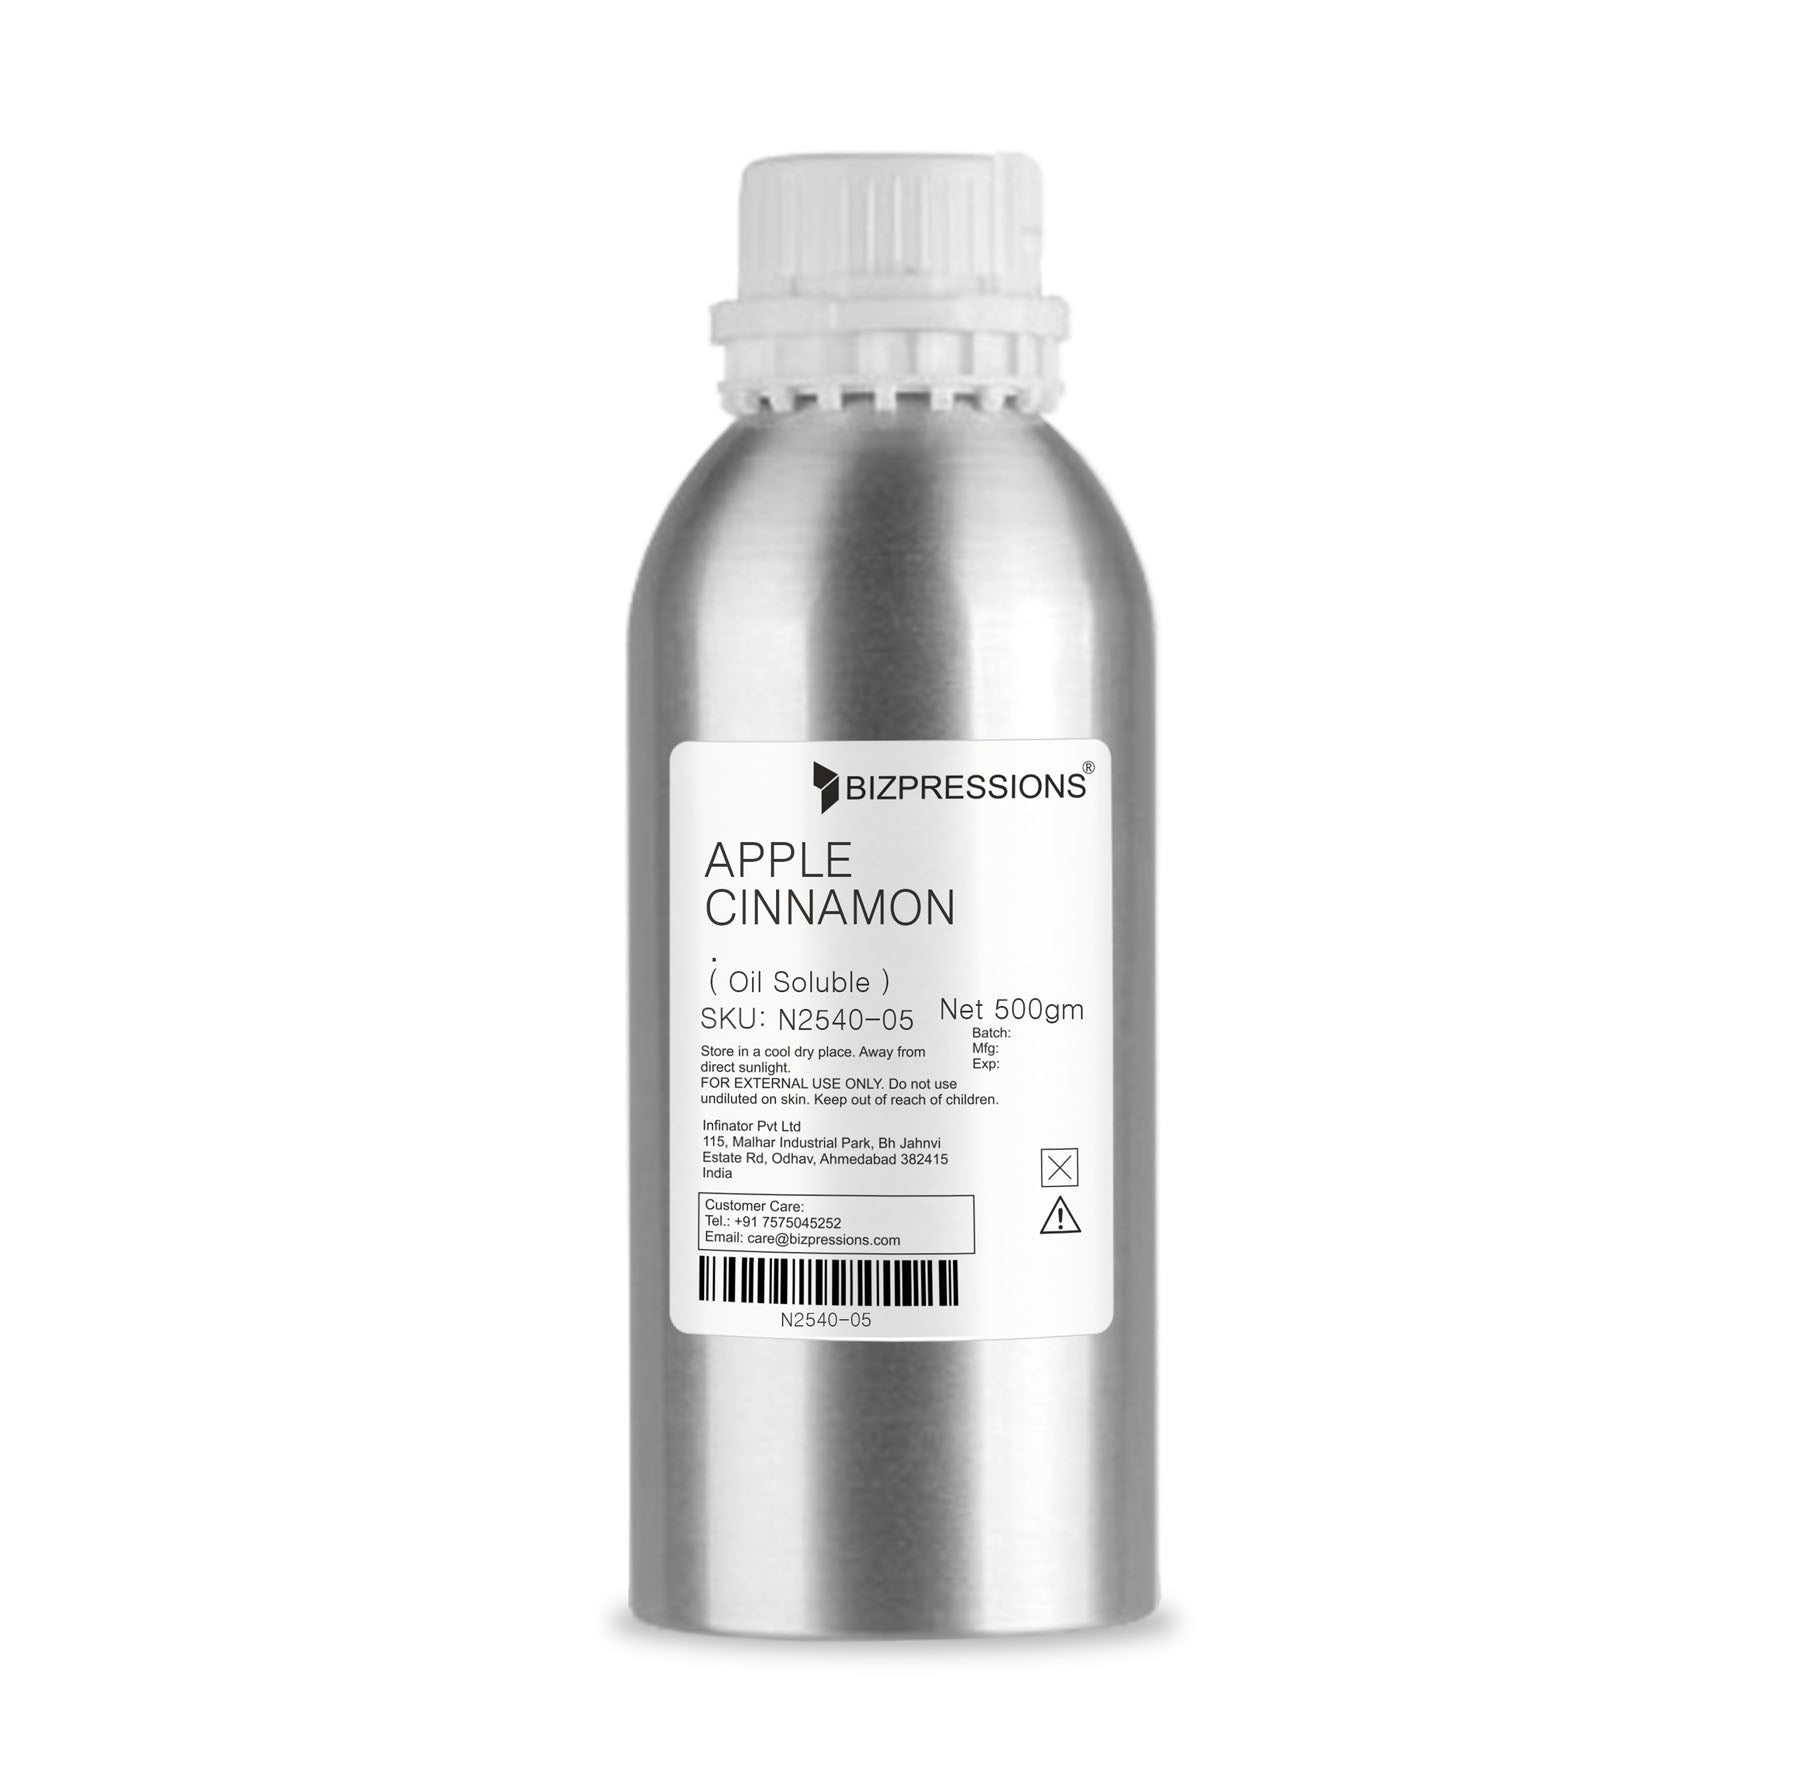 APPLE CINNAMON - Fragrance ( Oil Soluble ) - 500 gm